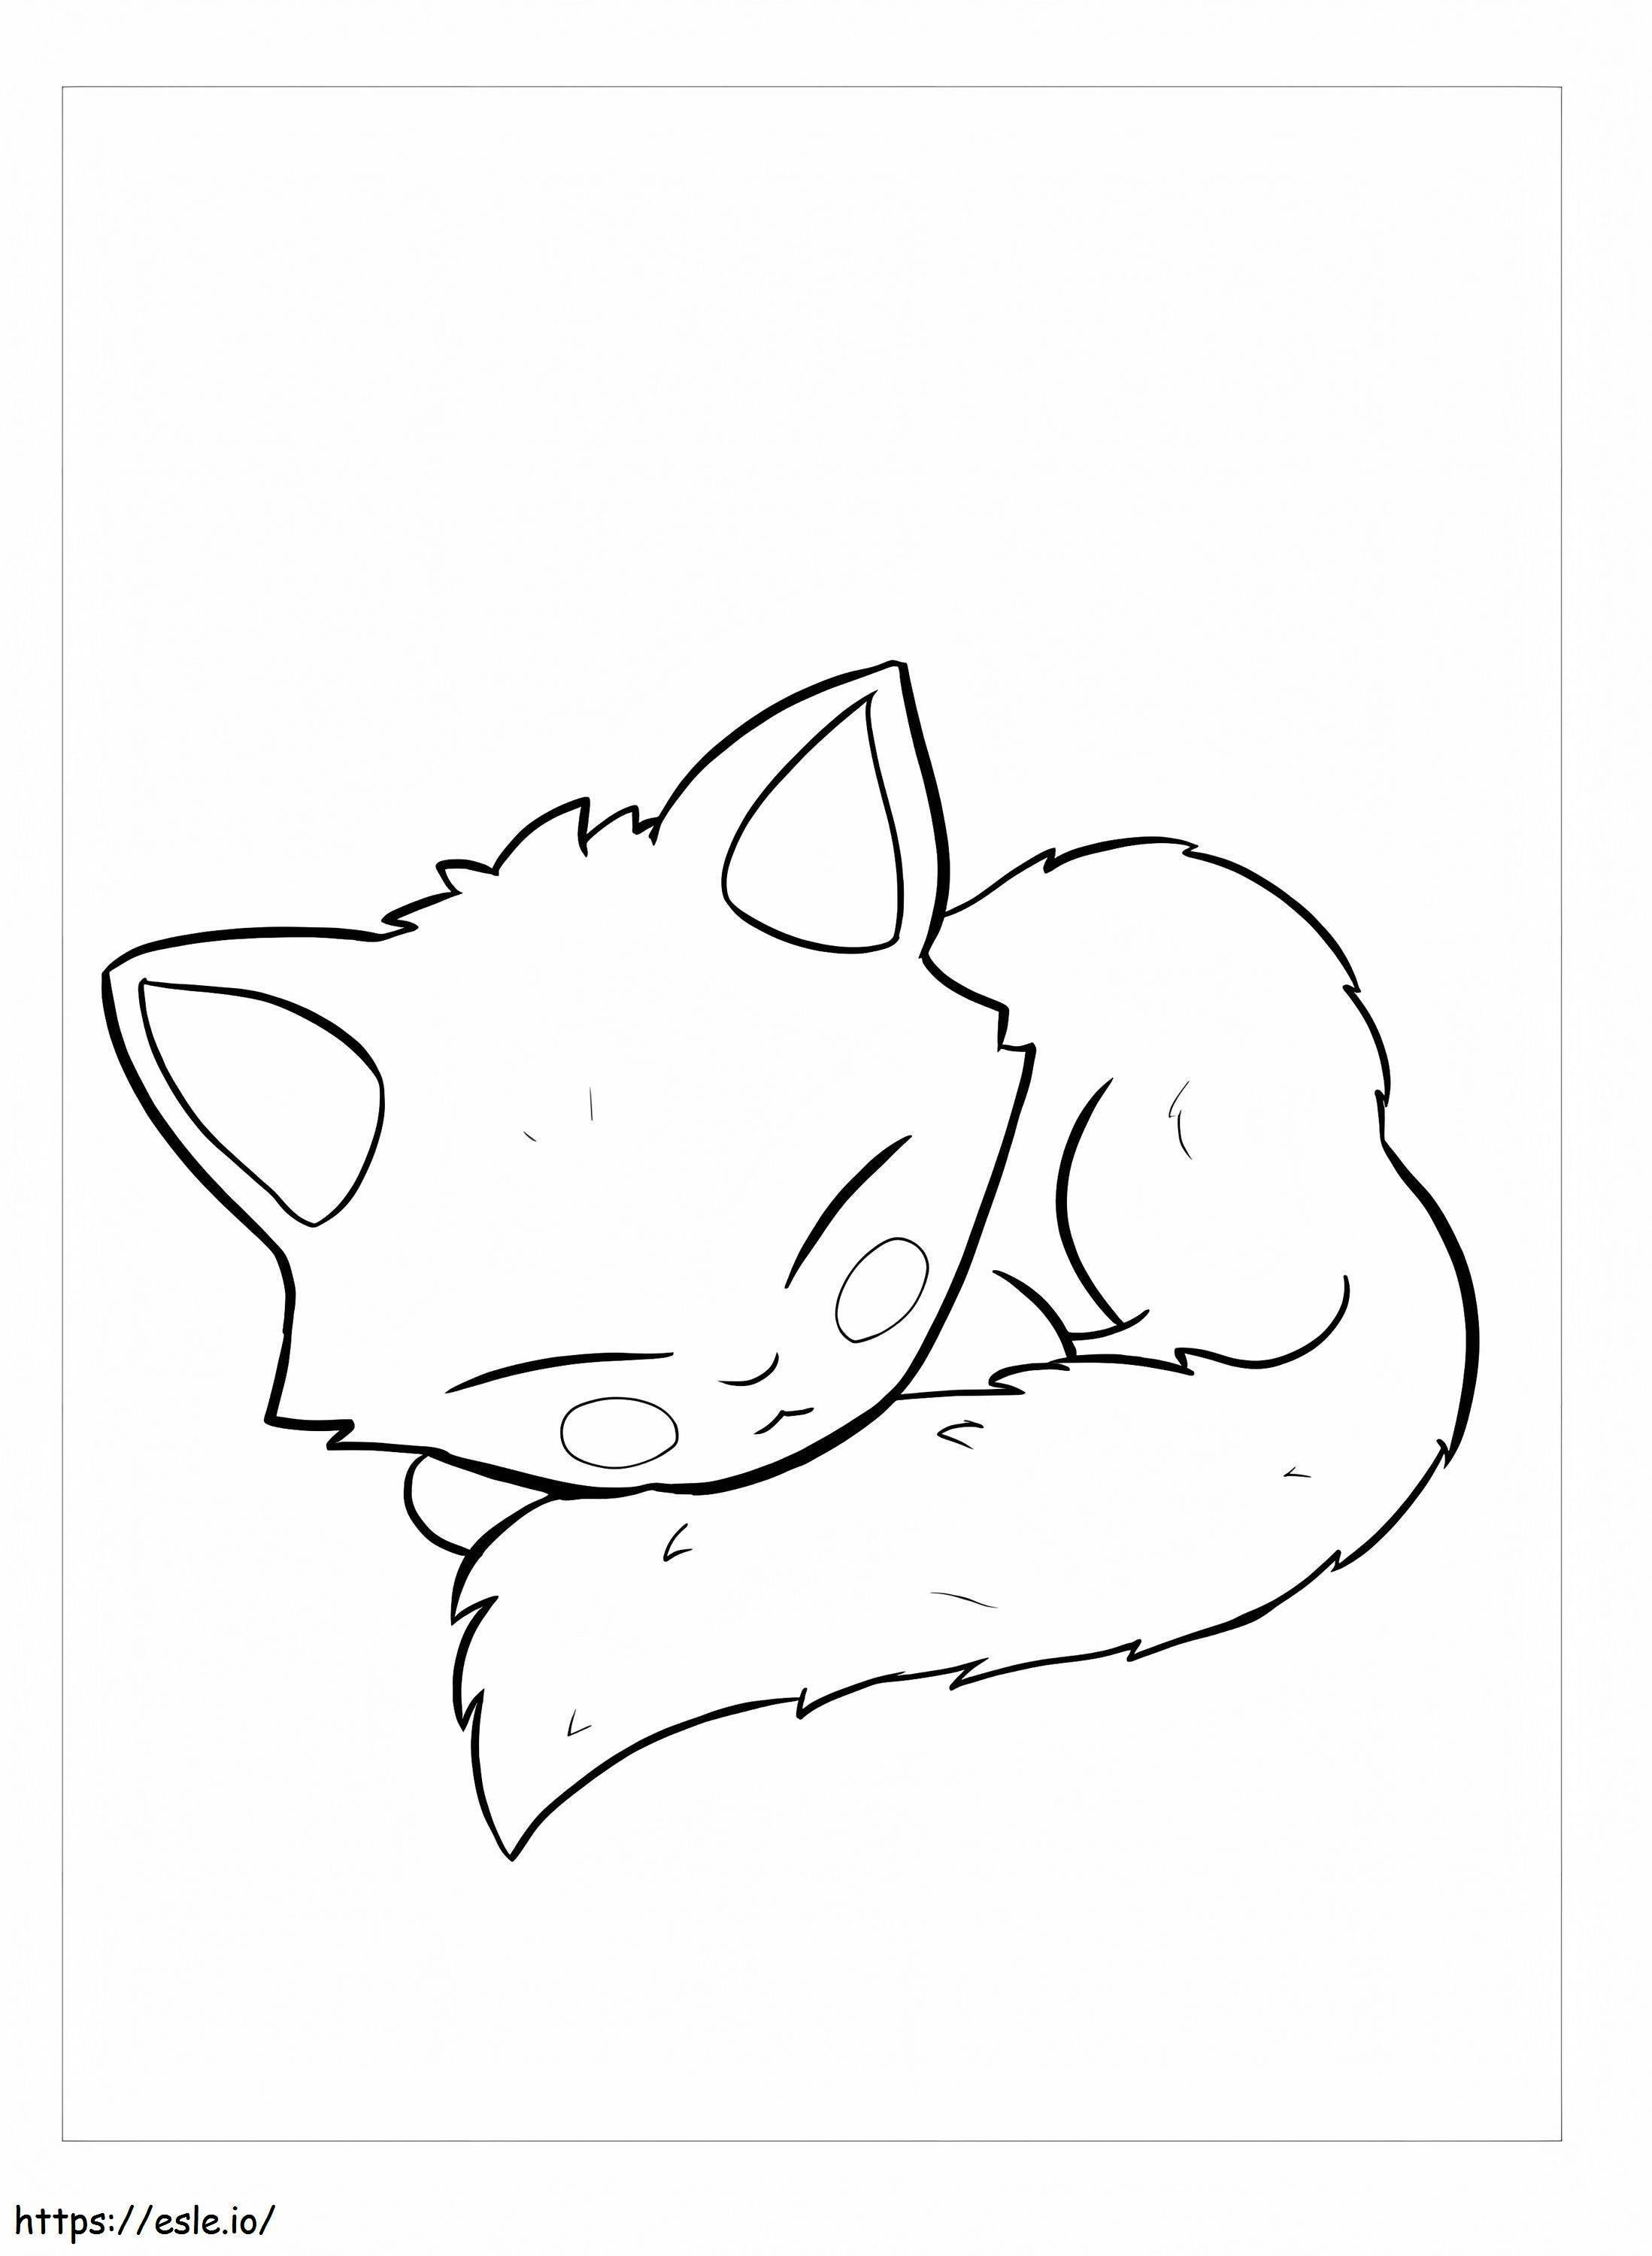 Sleepy Kitten coloring page